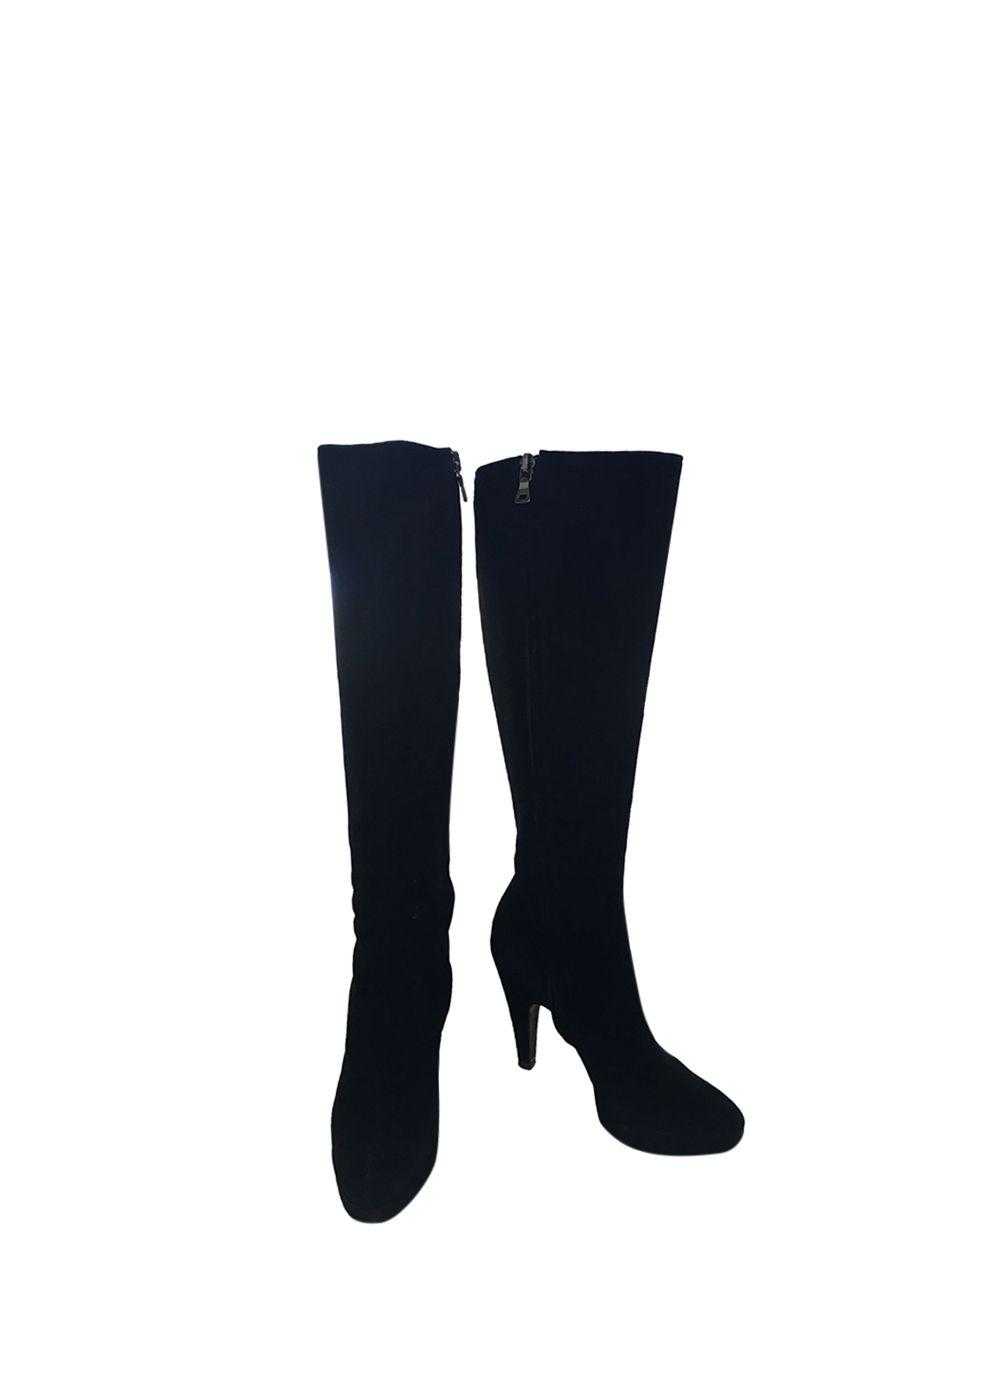 Prada Black Suede Knee Boots - image 1